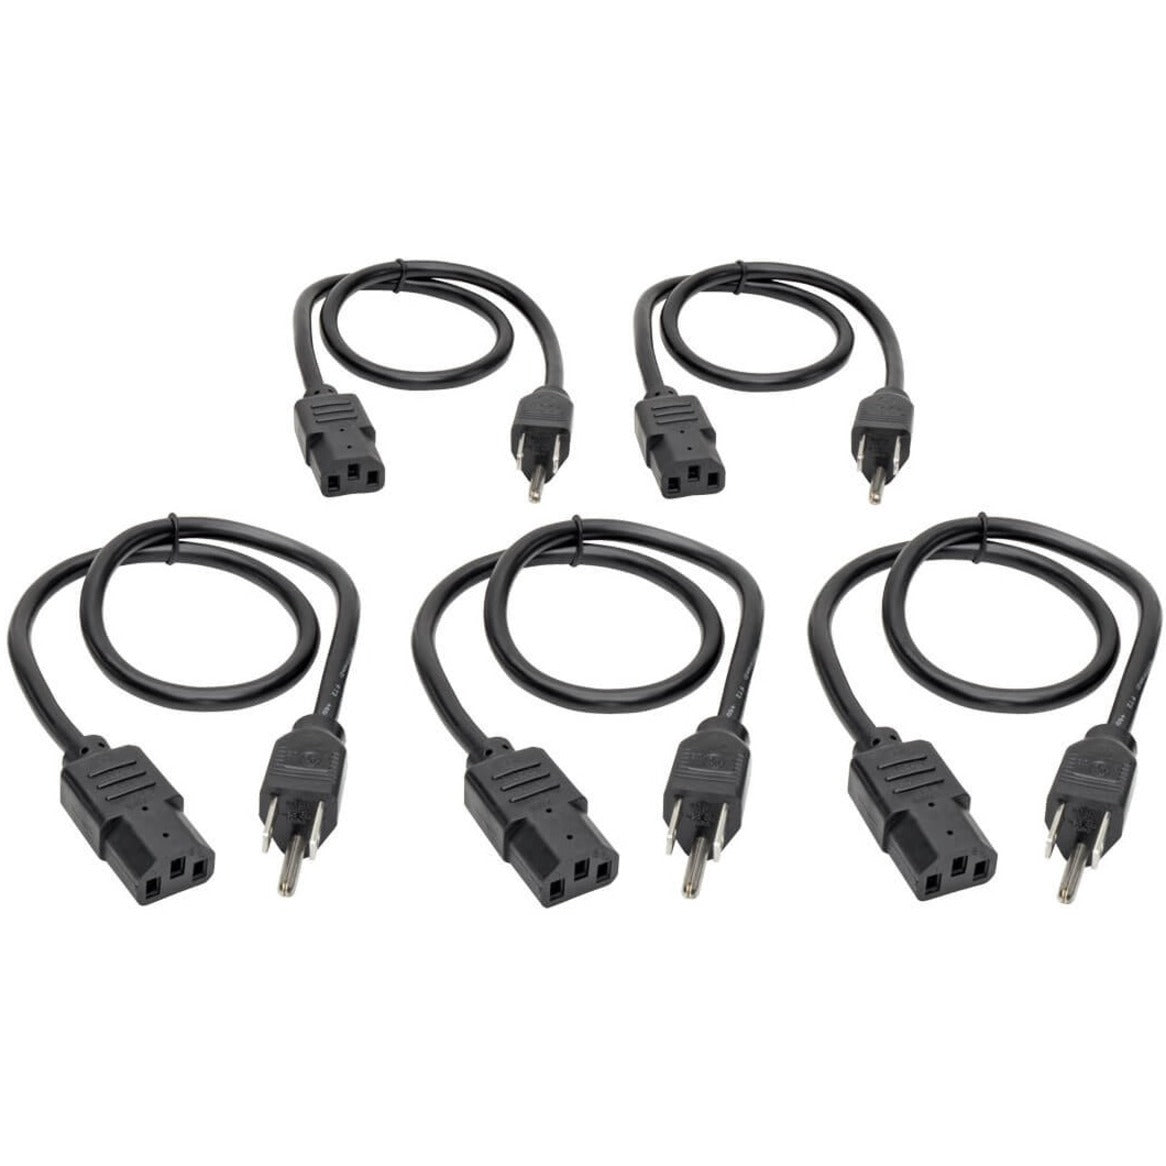 Tripp Lite P030-002-5 Standard Power Cord, 5-Pack, 2ft, NEMA 5-15P to IEC-320-C13 Power Cables